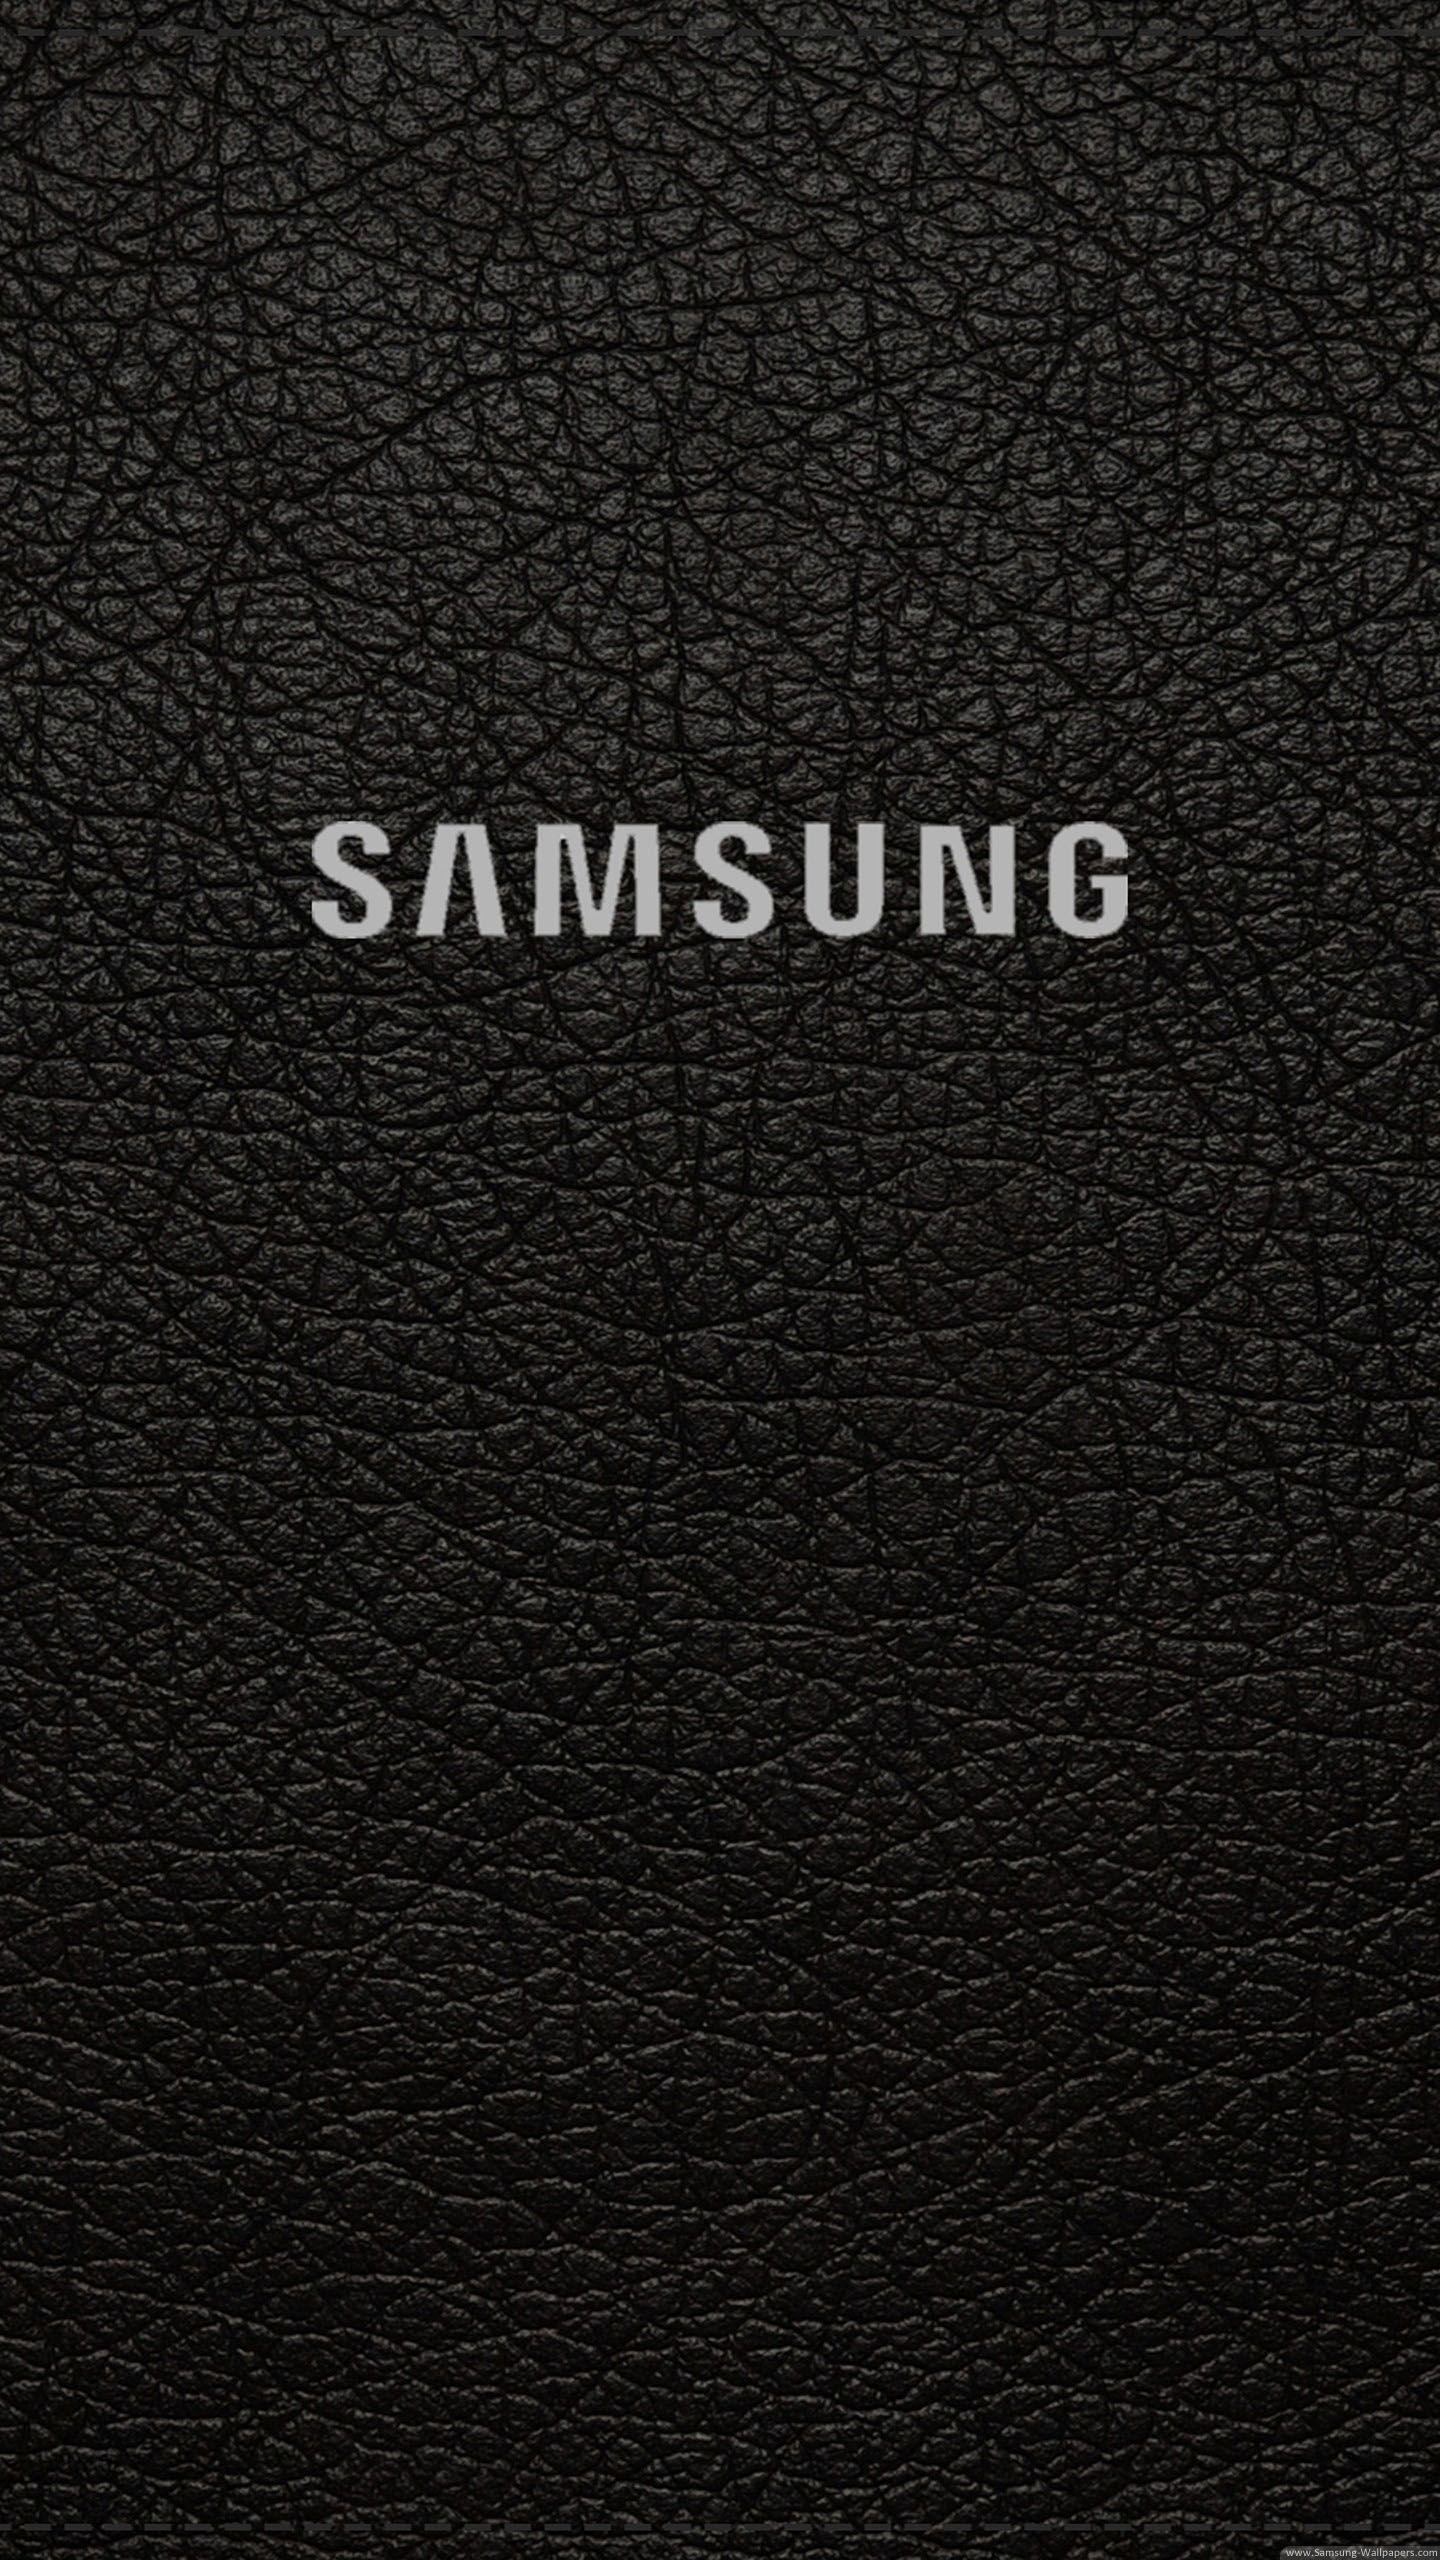 Samsung Background Logo Stock 1440x2560 Galaxy S6 Wallpaper